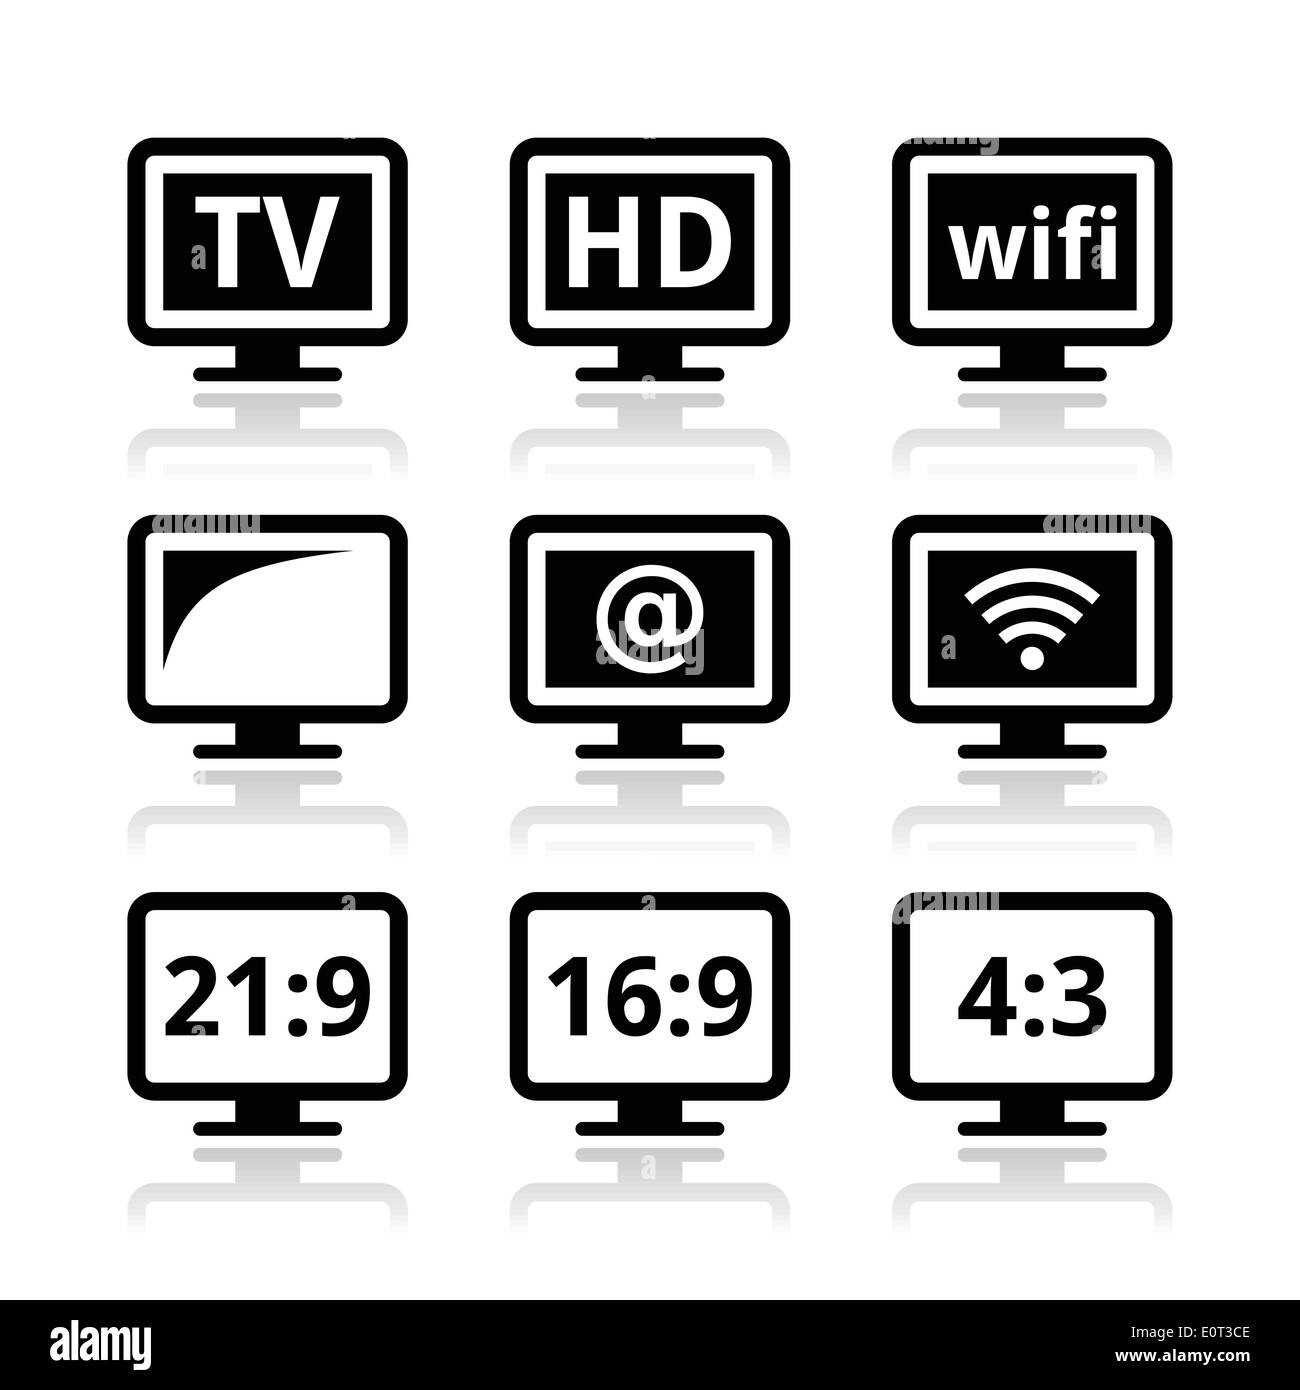 TV-Set, 3d, HD Vektor-icons Stock Vektor